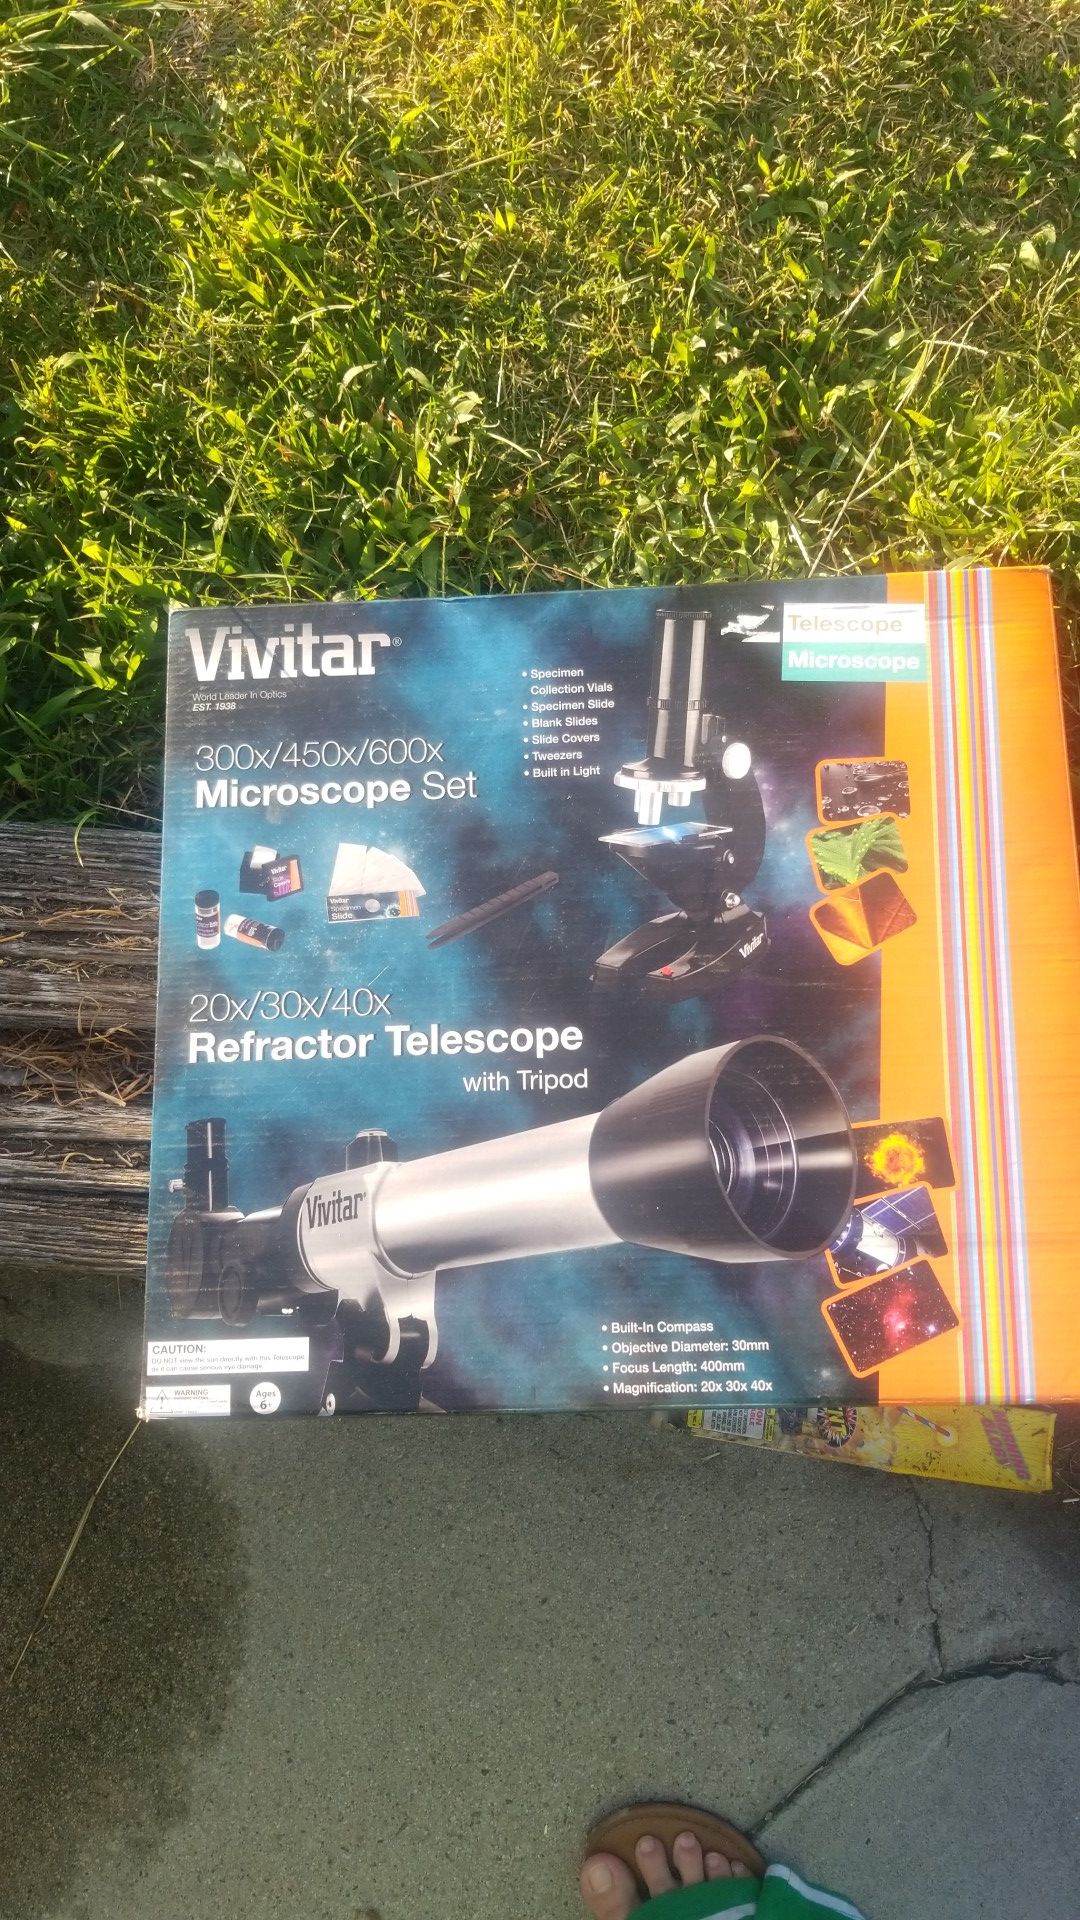 Vivitar microscope telescope set